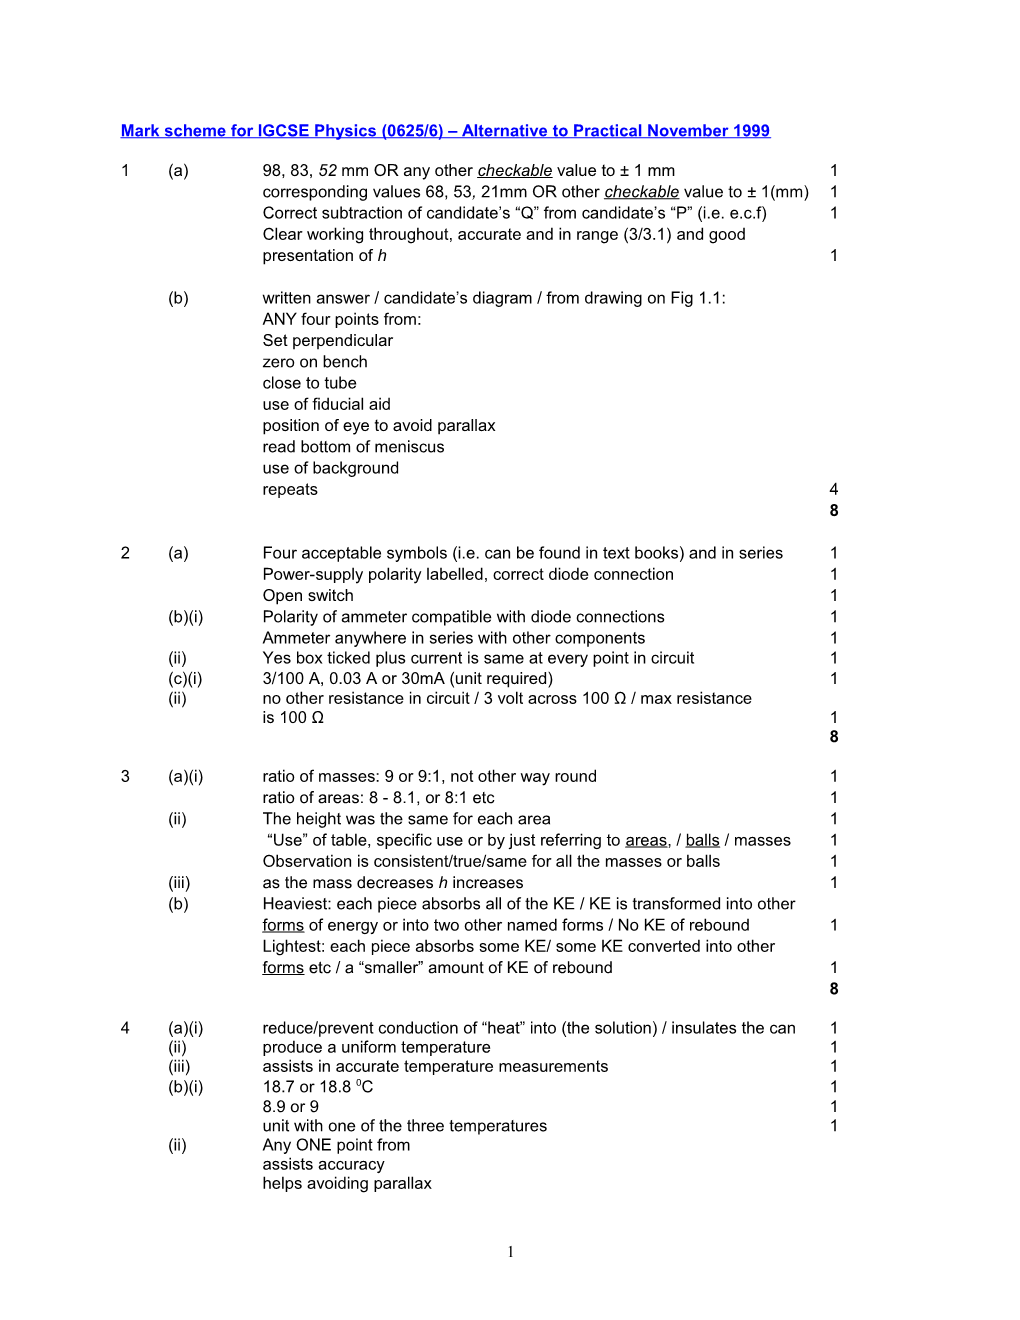 Mark Scheme for IGCSE Physics (0625/6) Alternative to Practical November 1999